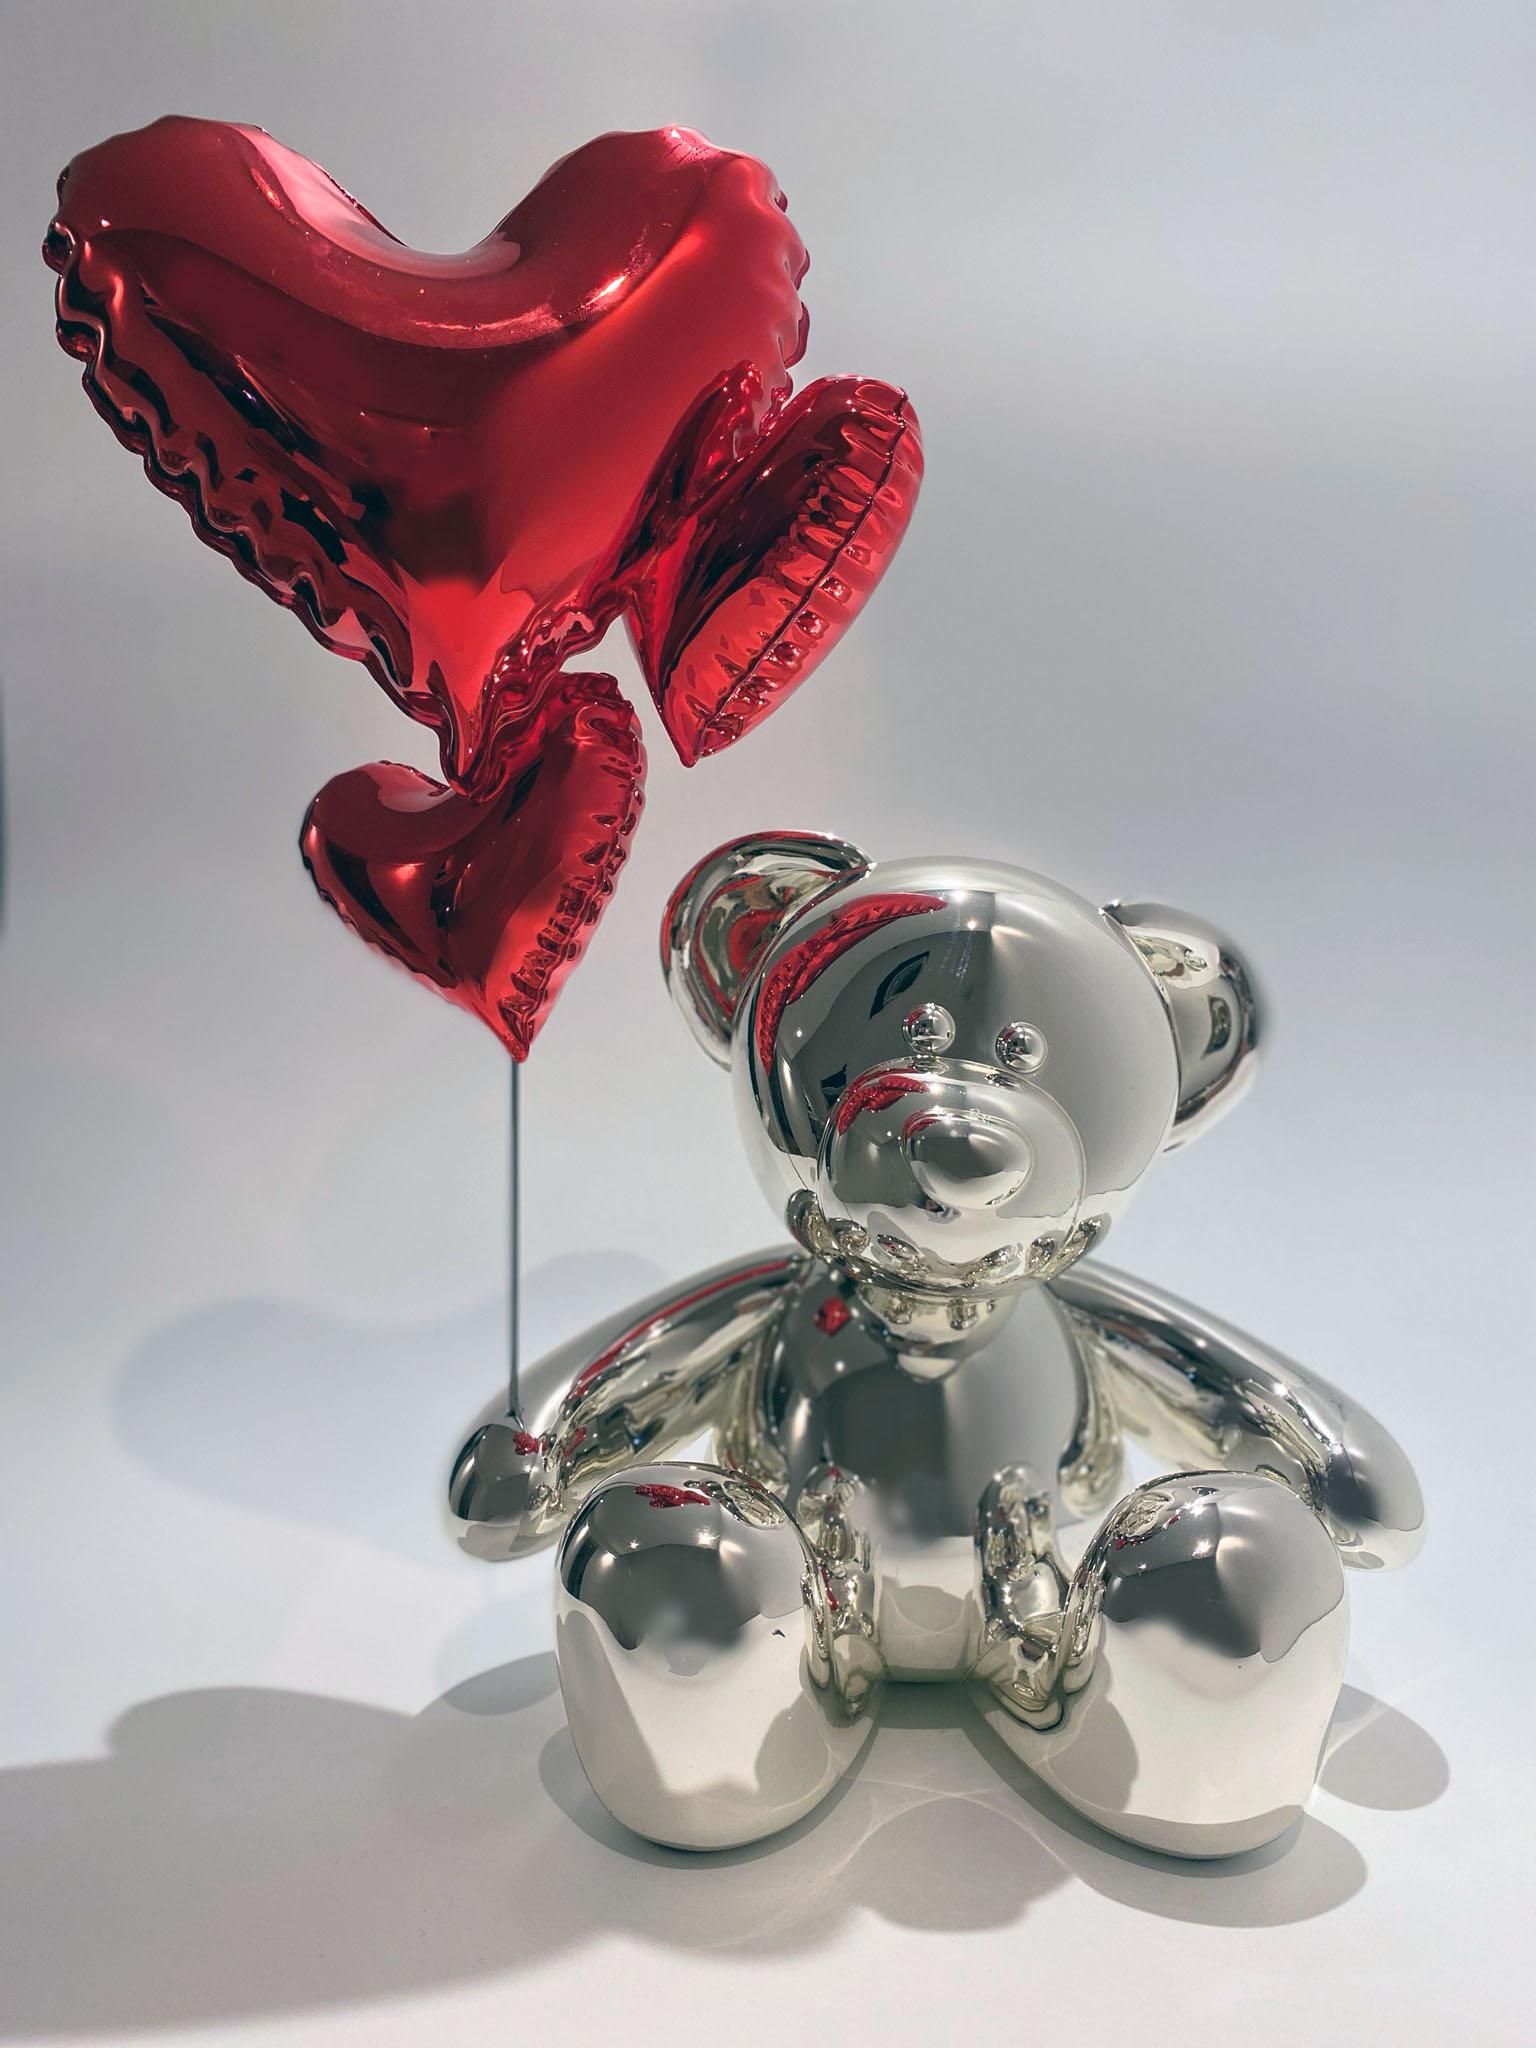 Nicolas Krauss Figurative Sculpture - Teddy Love - Chrome Silver & Red